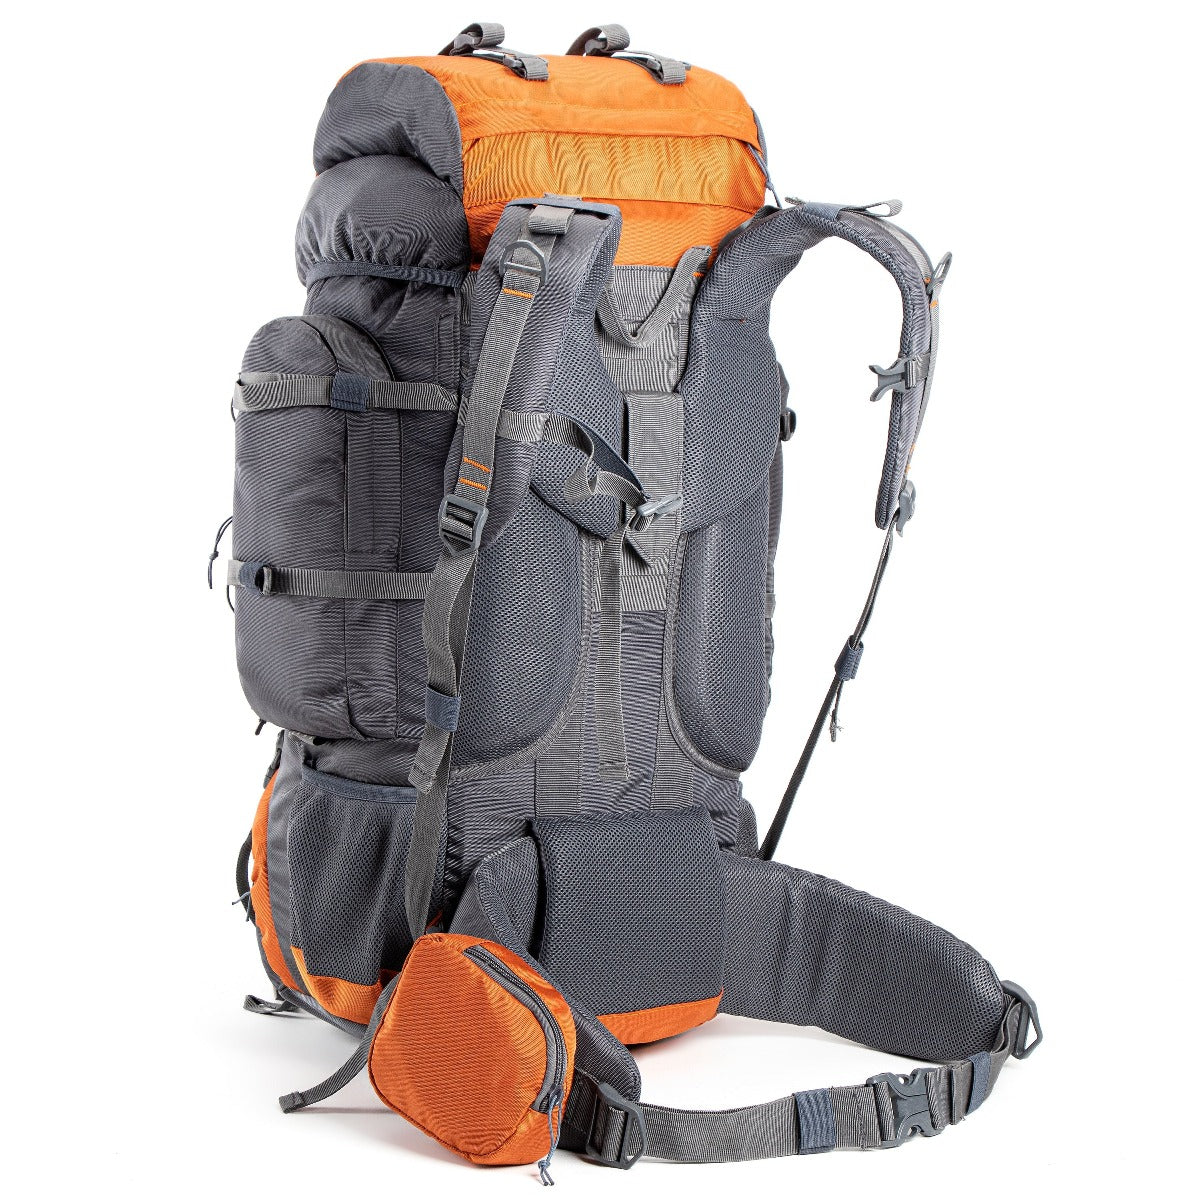 Walker Trekking and Backpacking Rucksack - 65 Litre - Grey & Orange 5